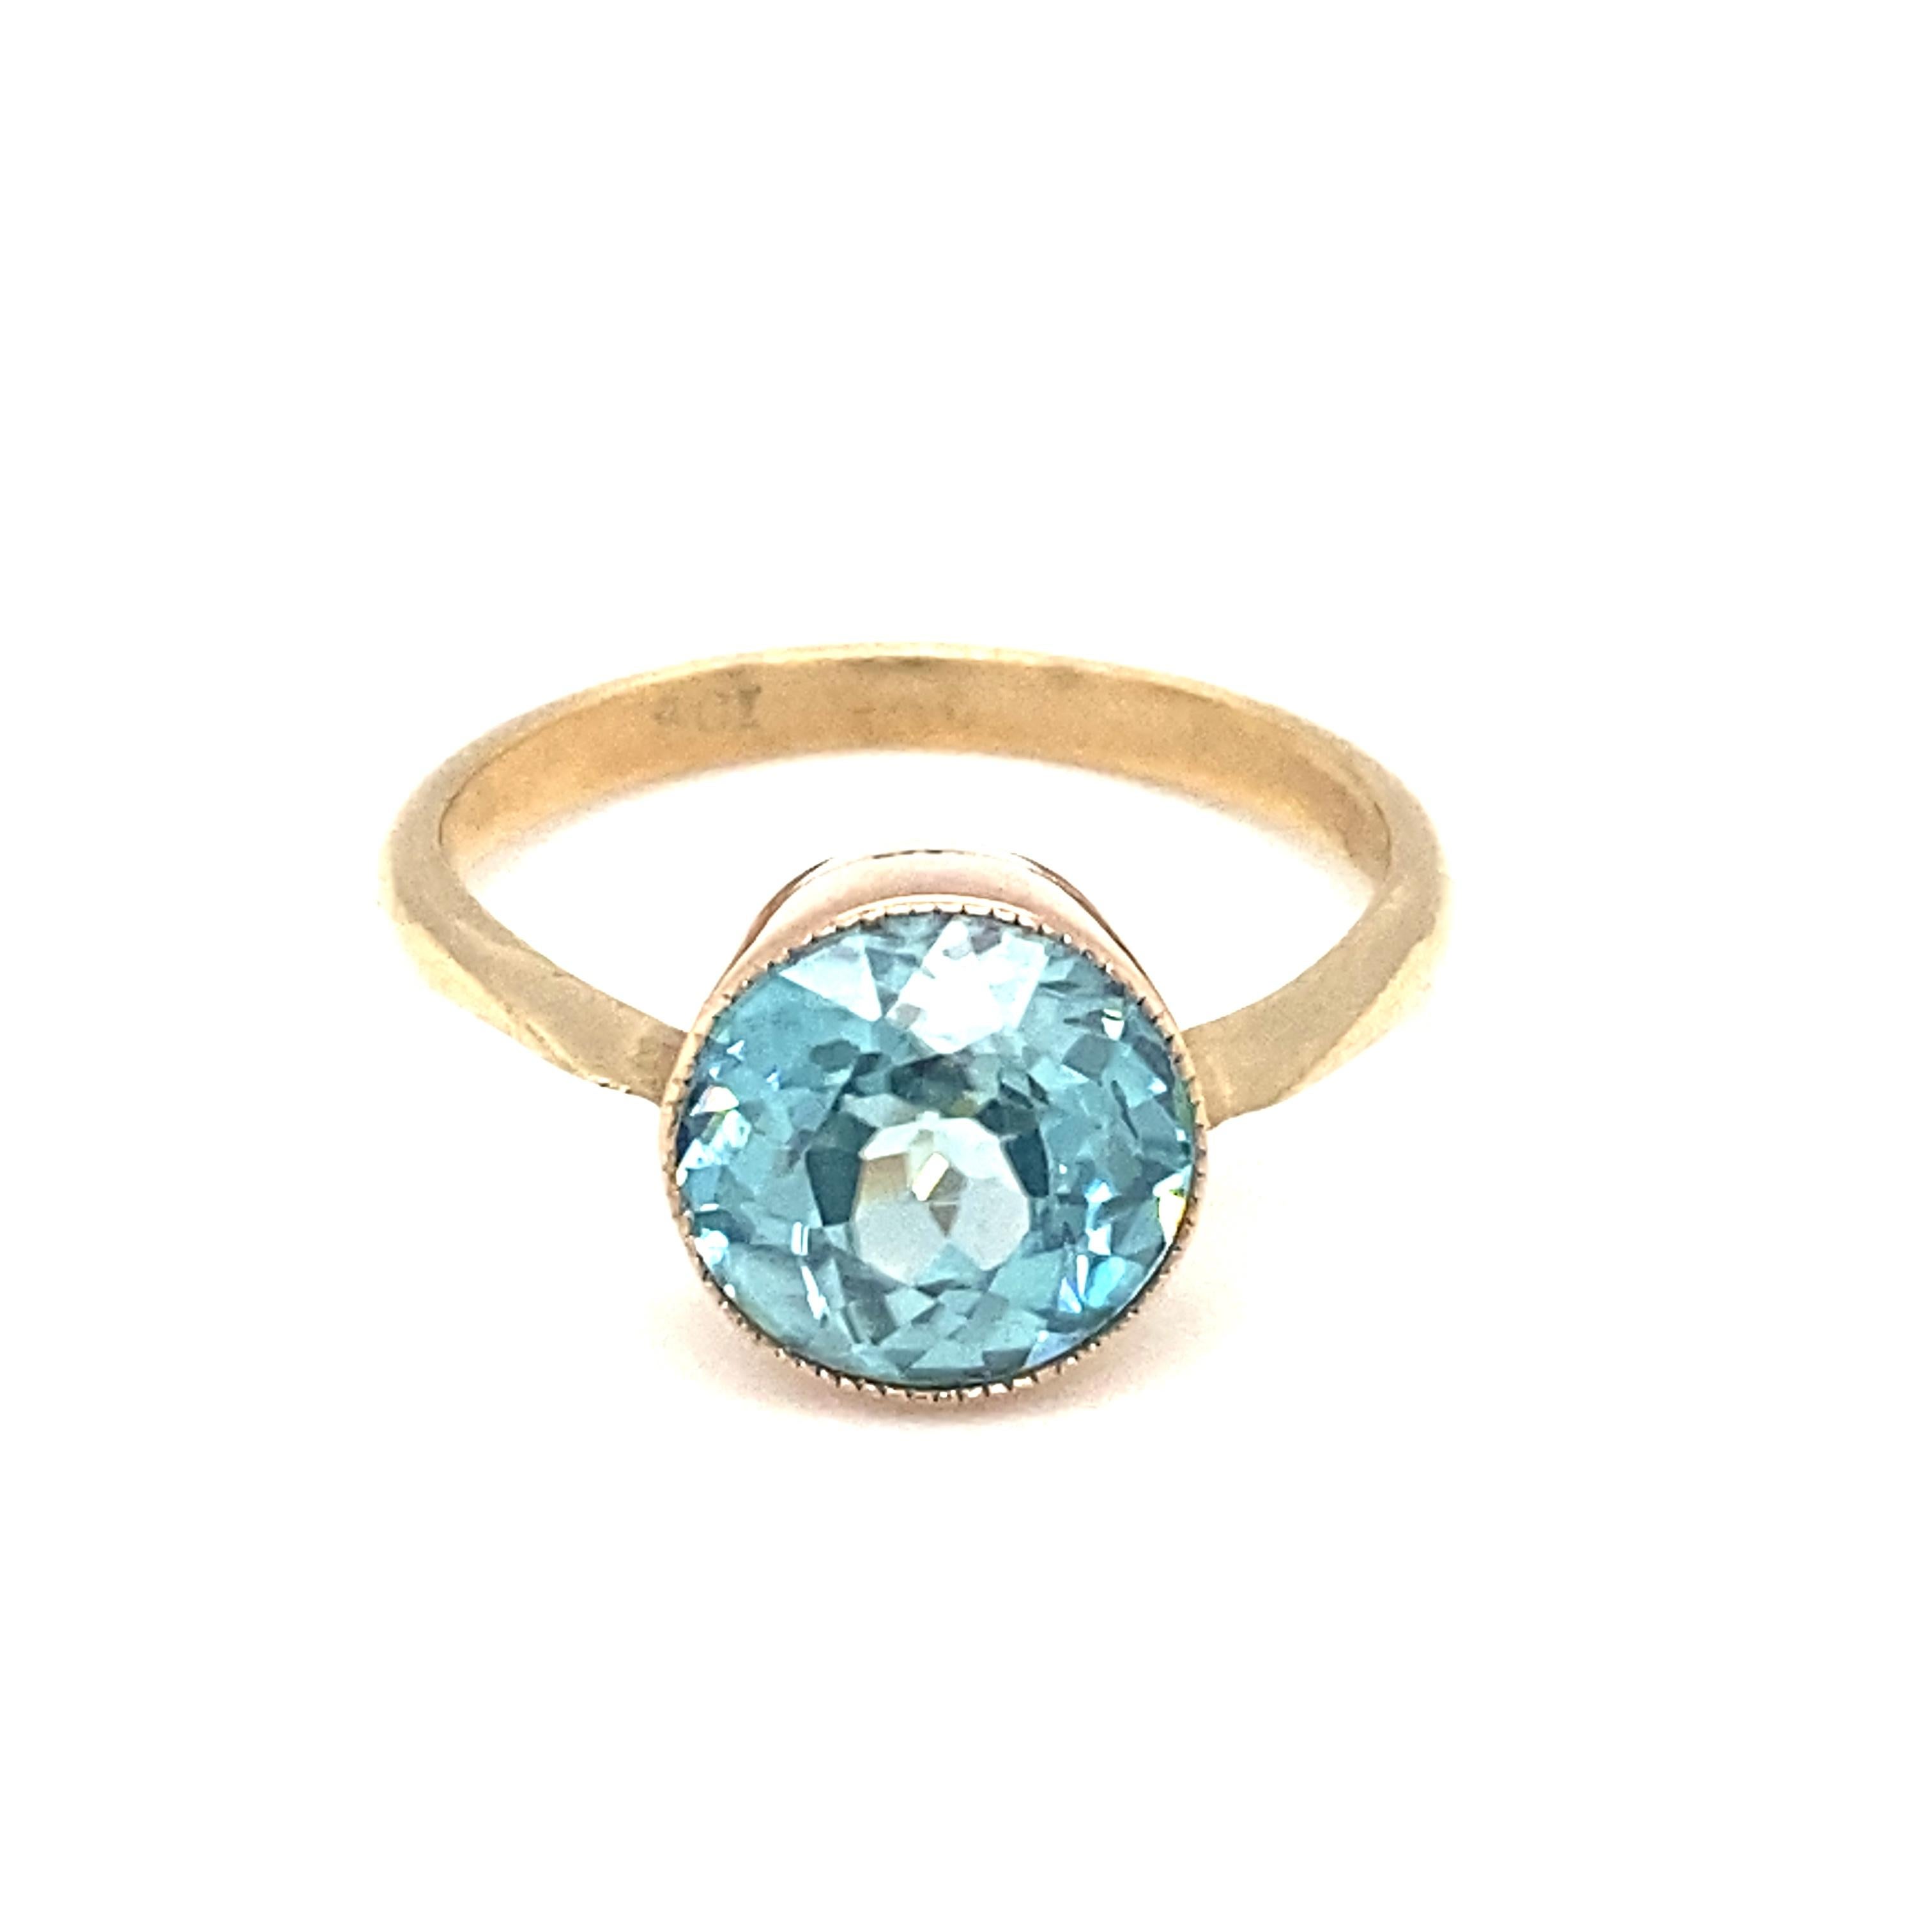 Circa 1890s Victorian 2 Carat Blue Zircon Solitaire Ring in 9 Karat Gold In Excellent Condition For Sale In Atlanta, GA